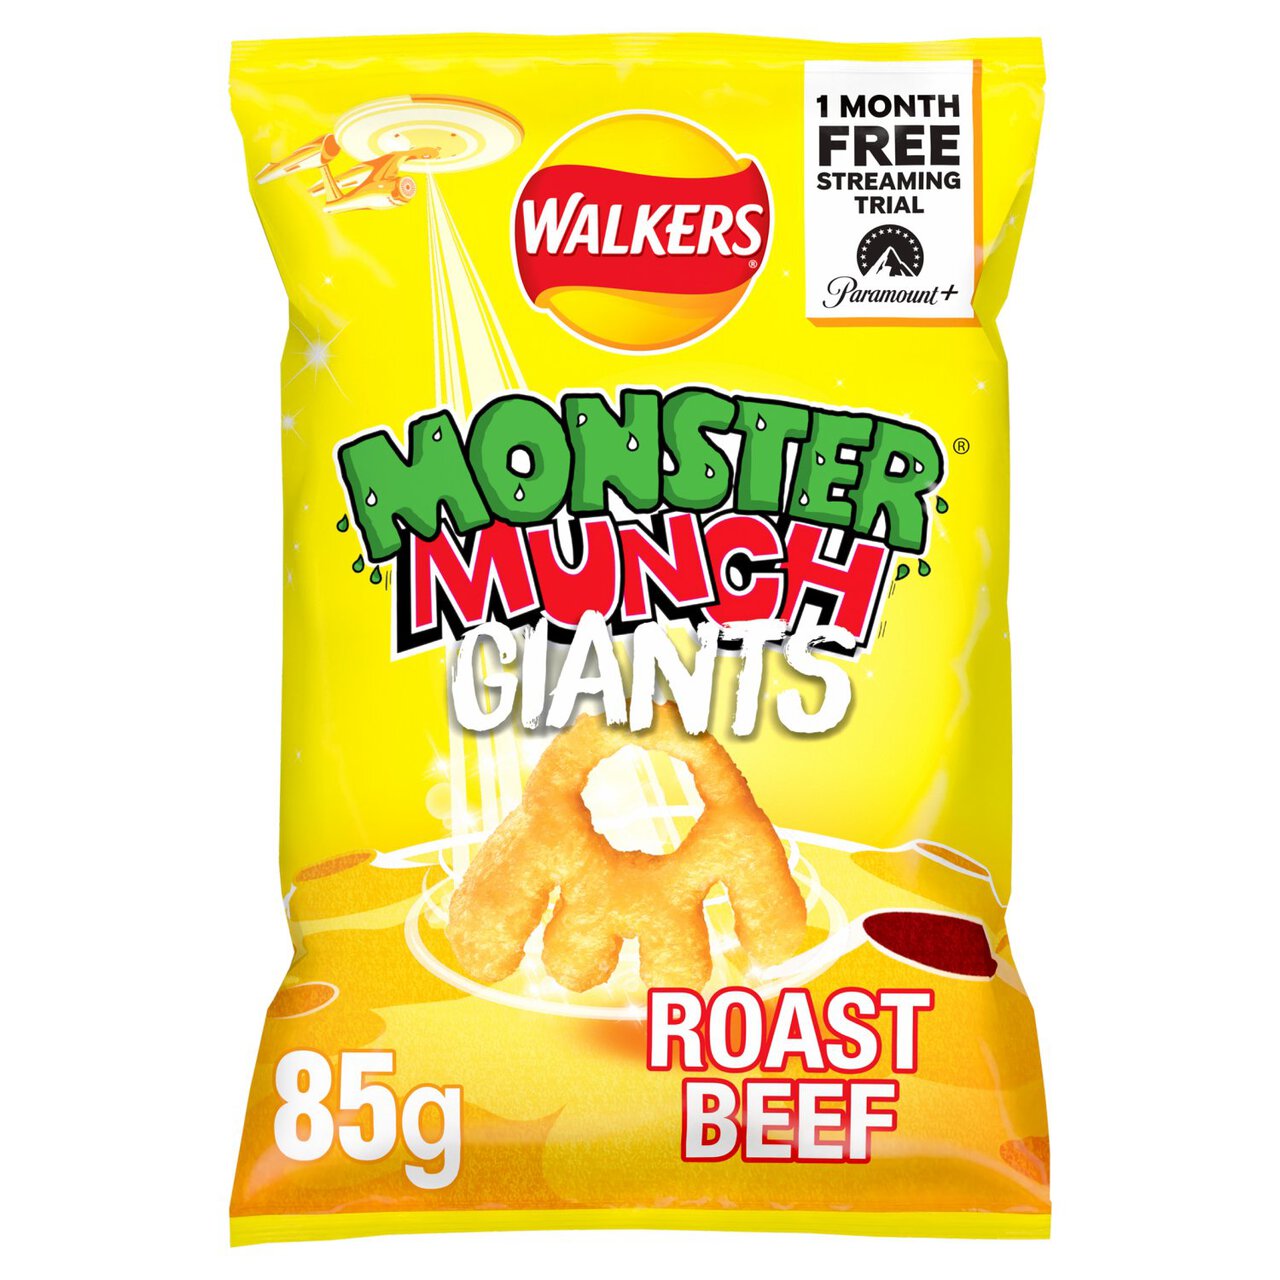 Monster Munch Giants Roast Beef Snacks 85g